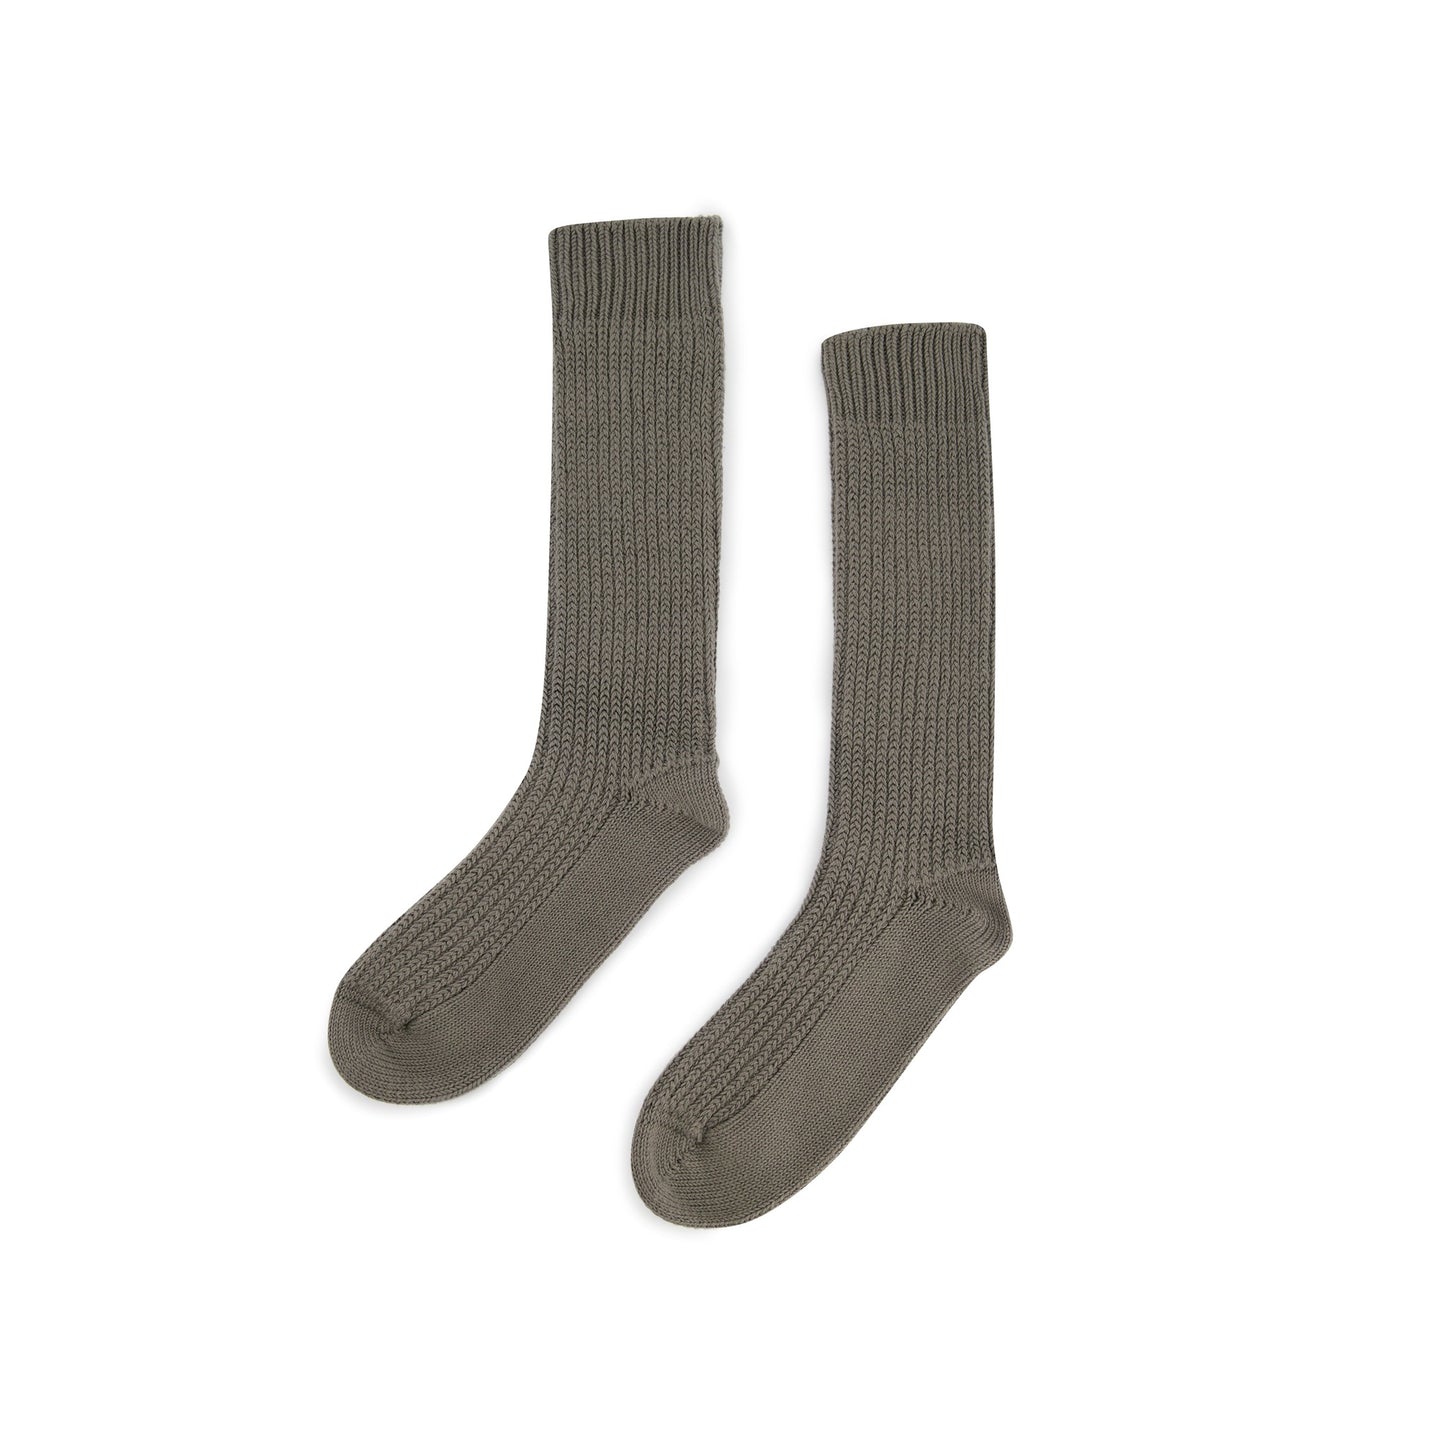 Michel Exaggerated Rib Cotton Socks Weimaraner Grey